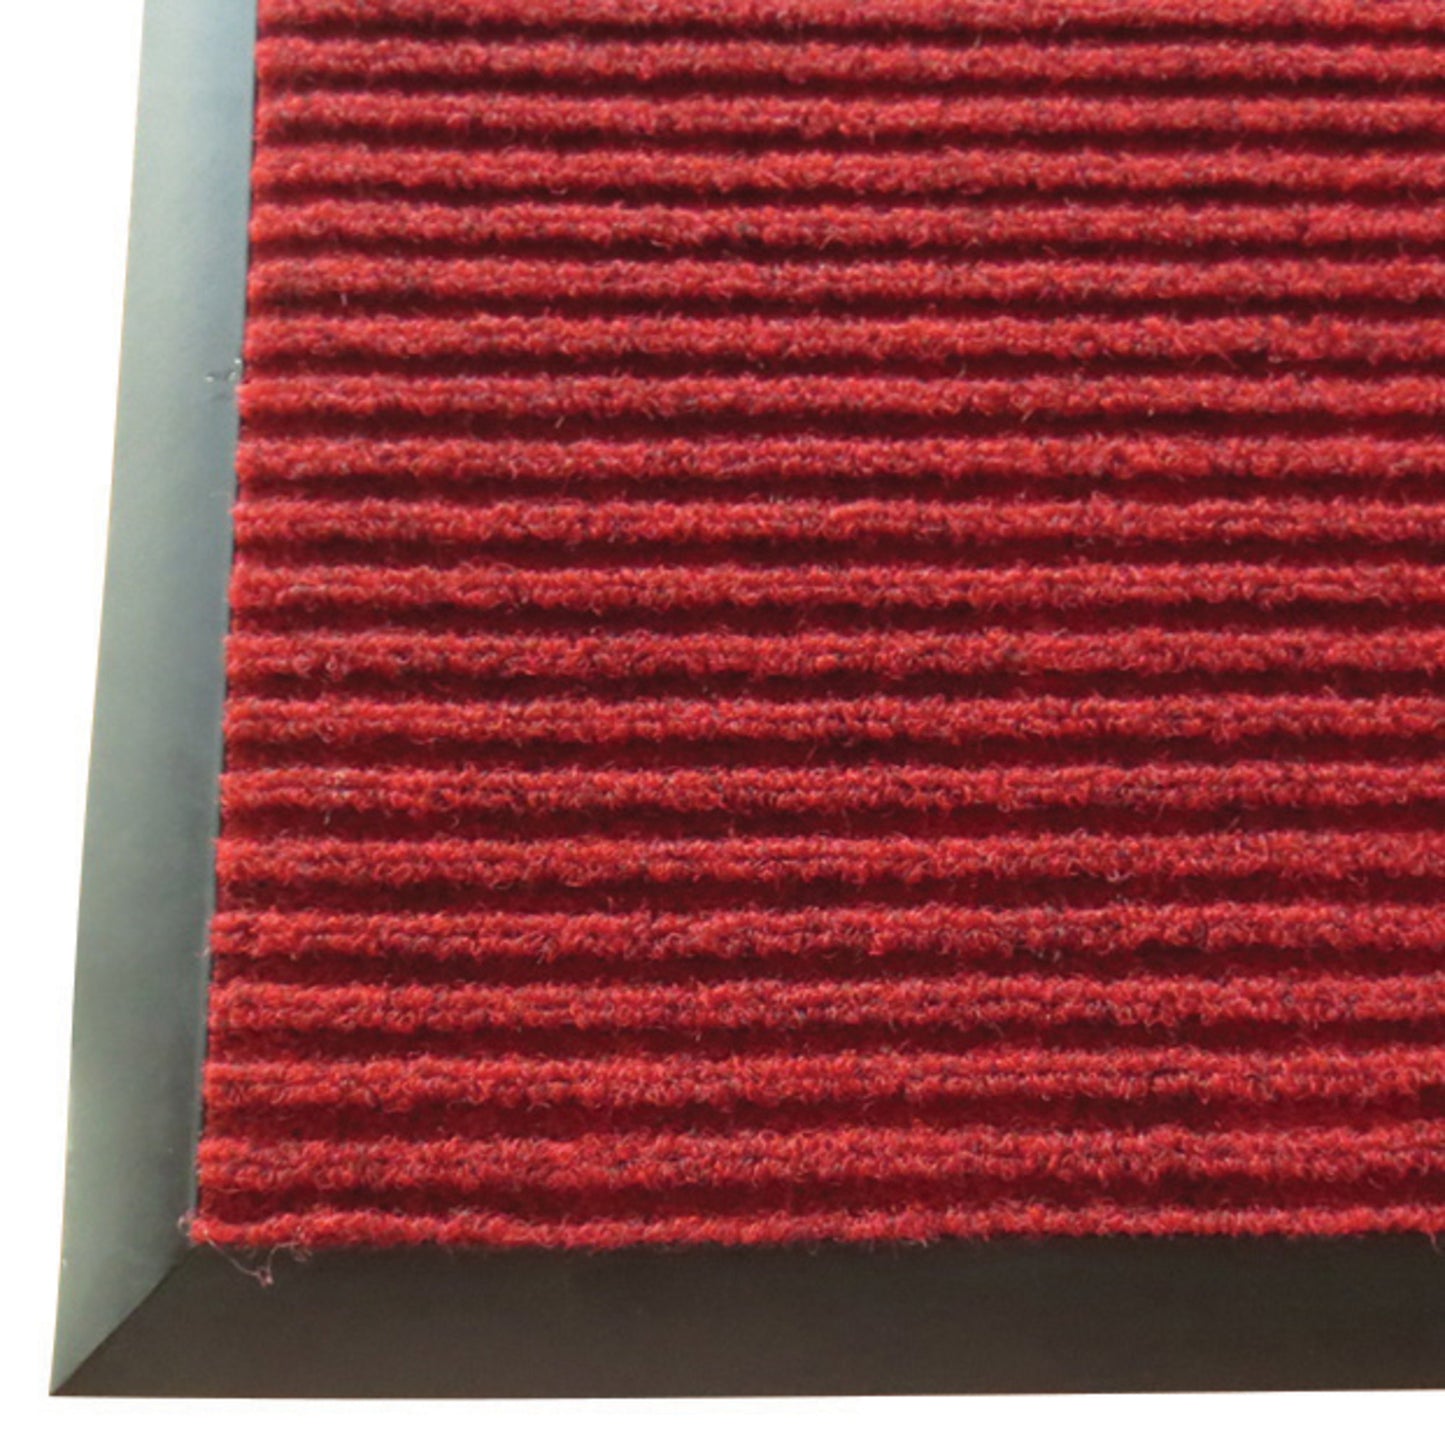 FMC-310U - Carpet Floor Mat - 3' x 10', Burgundy